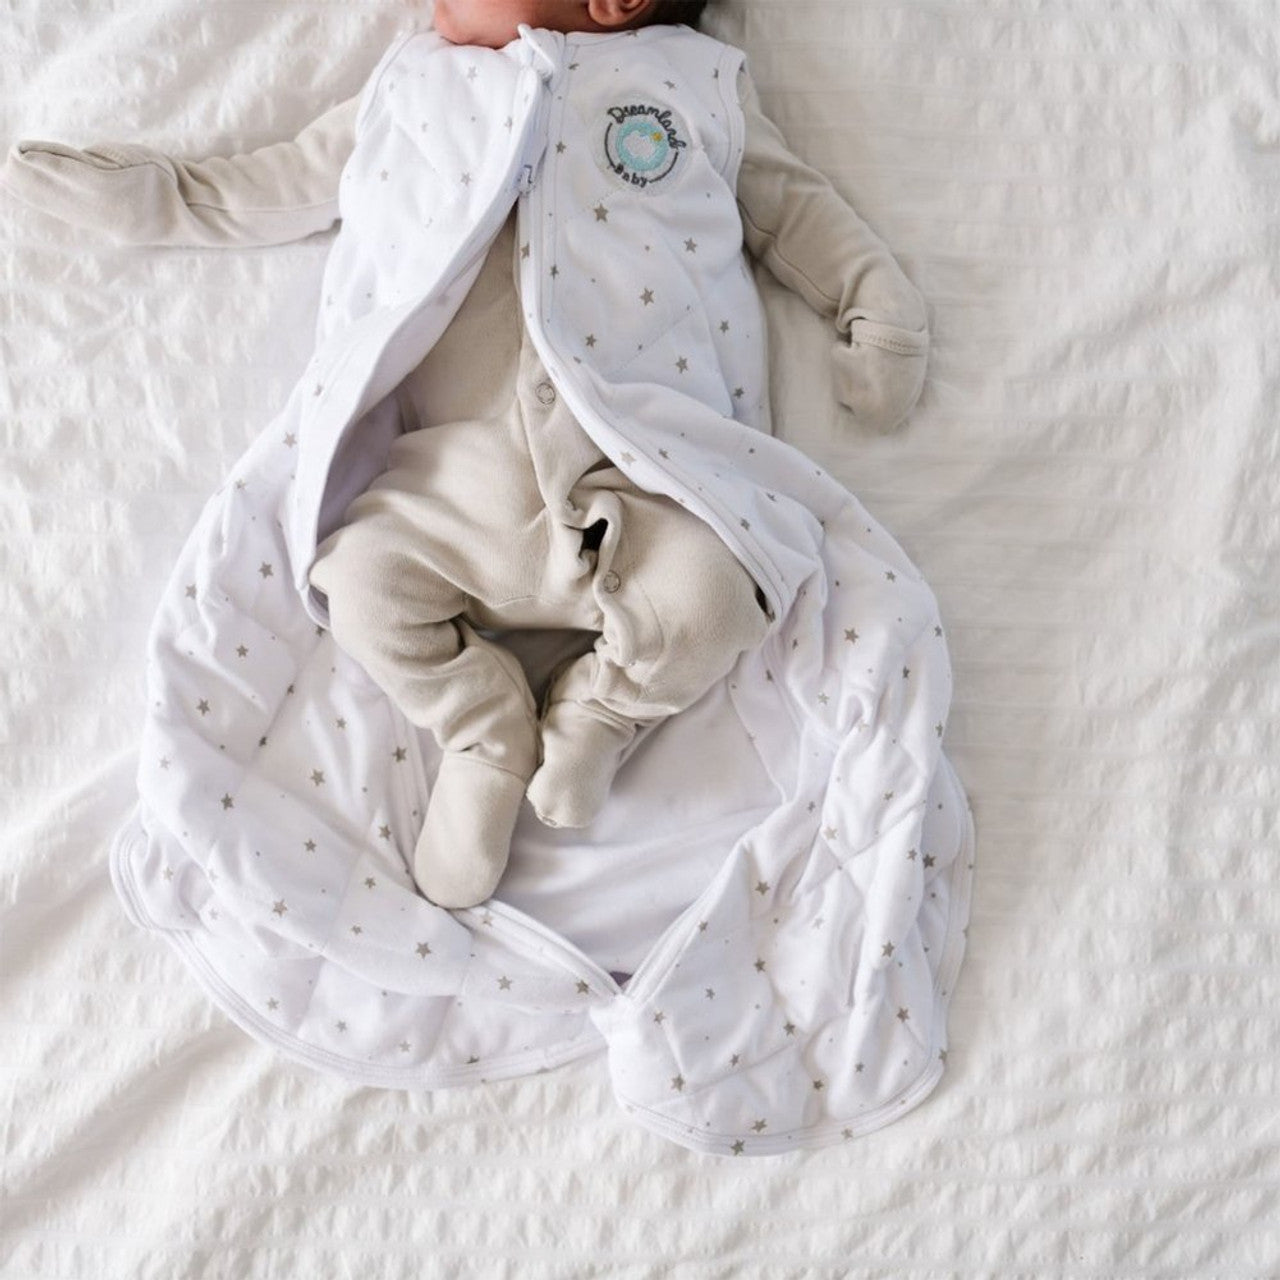 What Should My Baby Wear Under A Sleep Sack? – Dreamland Baby